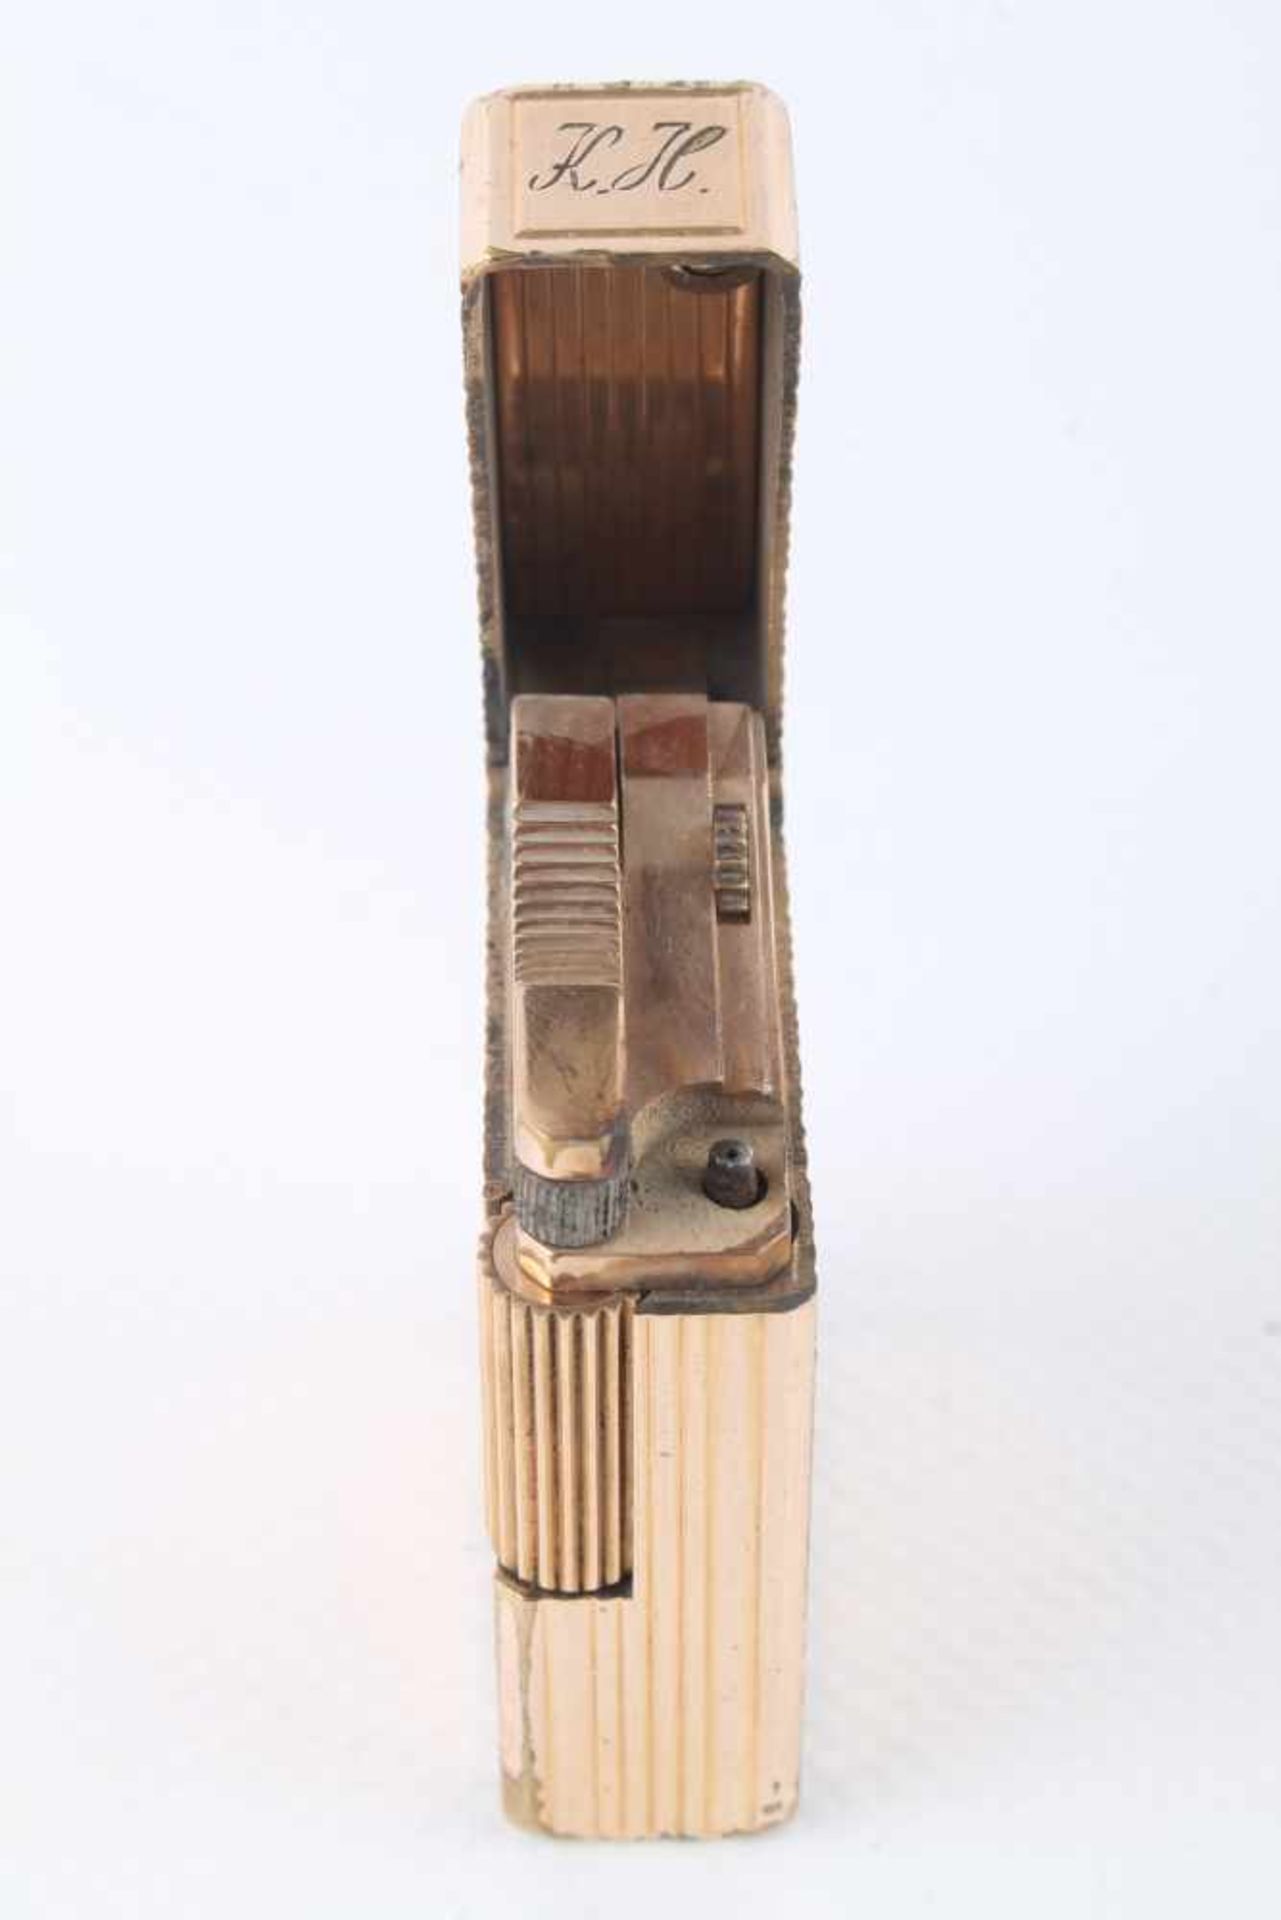 S.T. Dupont Feuerzeug, lighter, - Bild 3 aus 4